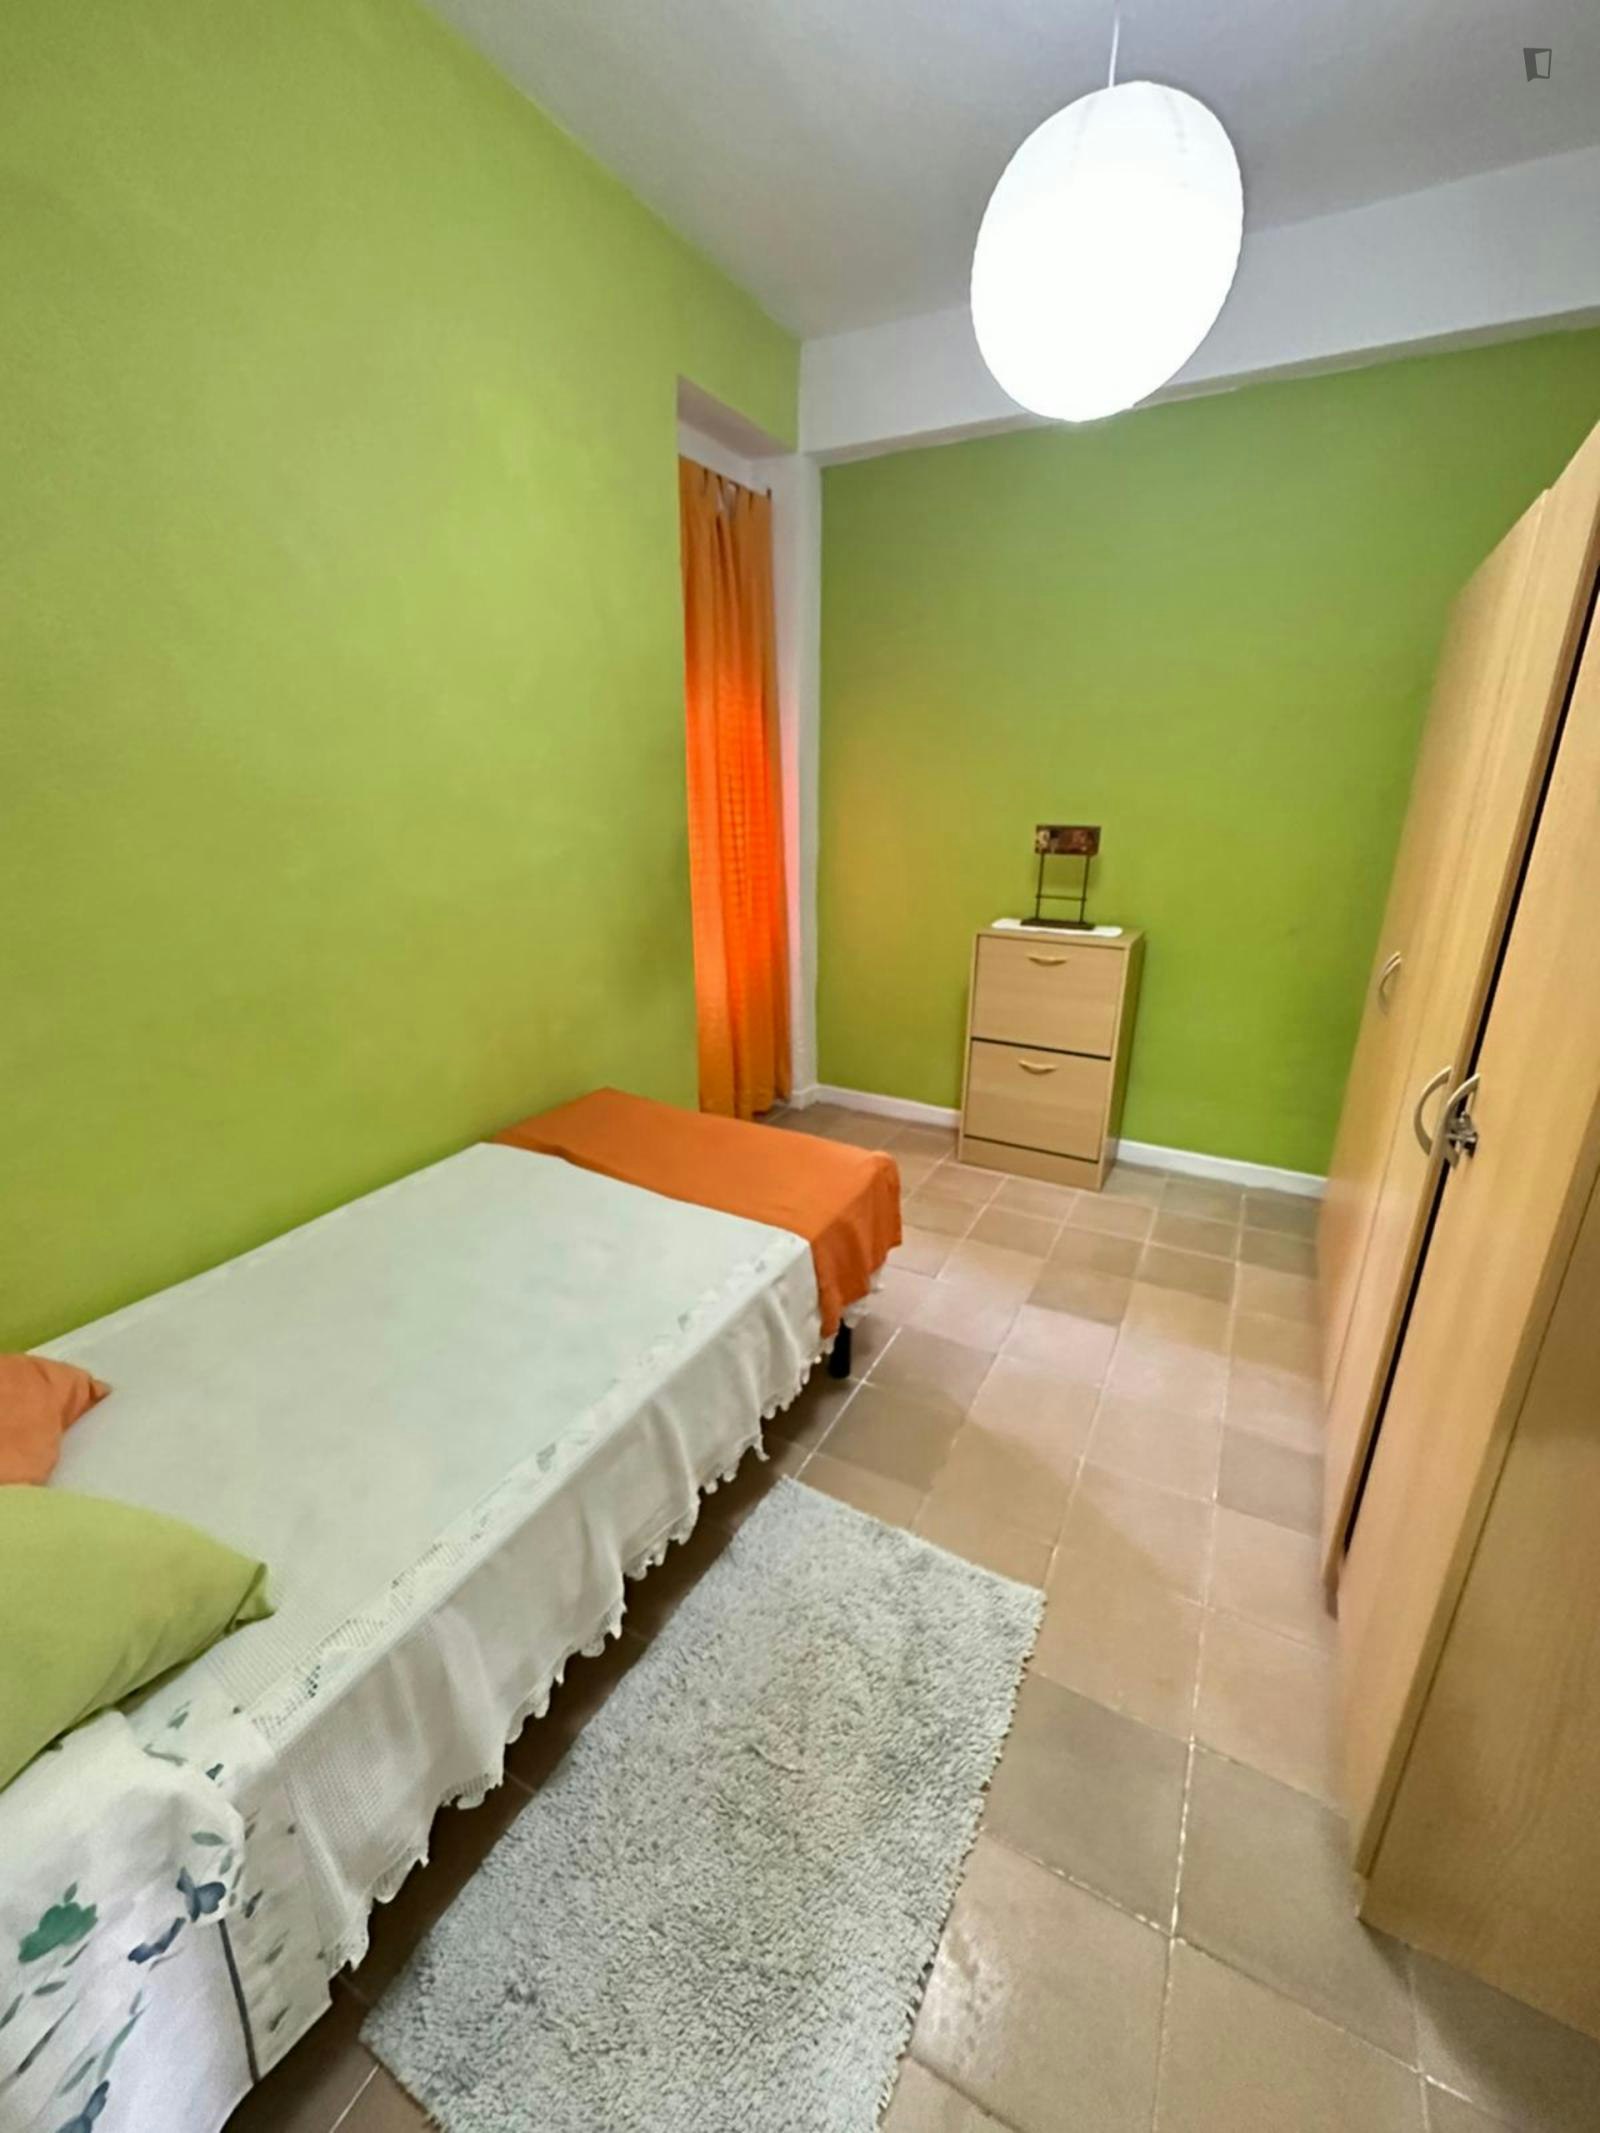 Cute single bedroom in Alicante next to Mercat metro station